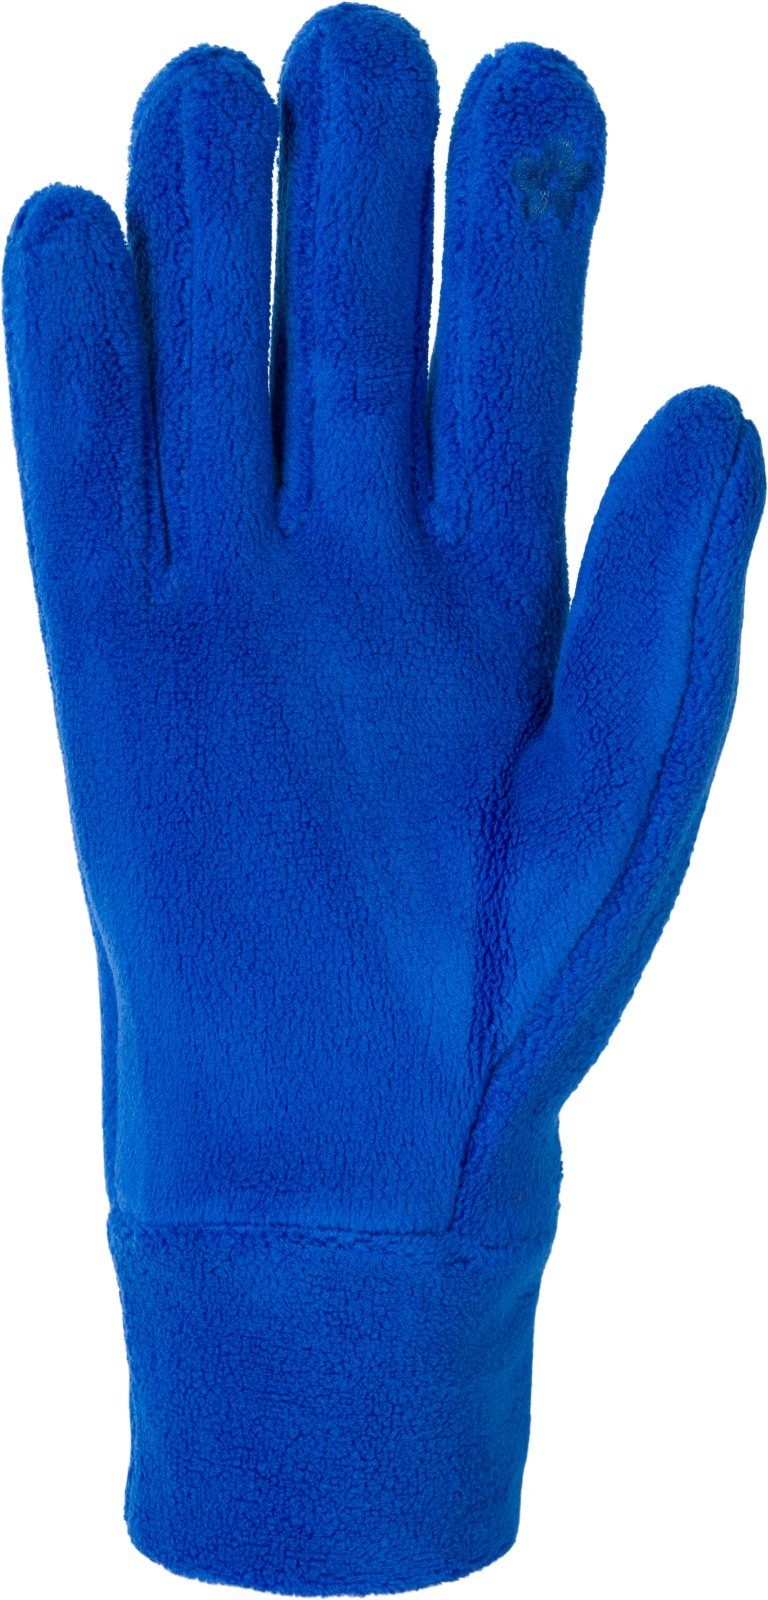 styleBREAKER Fleecehandschuhe Einfarbige Touchscreen Fleece Royalblau Handschuhe